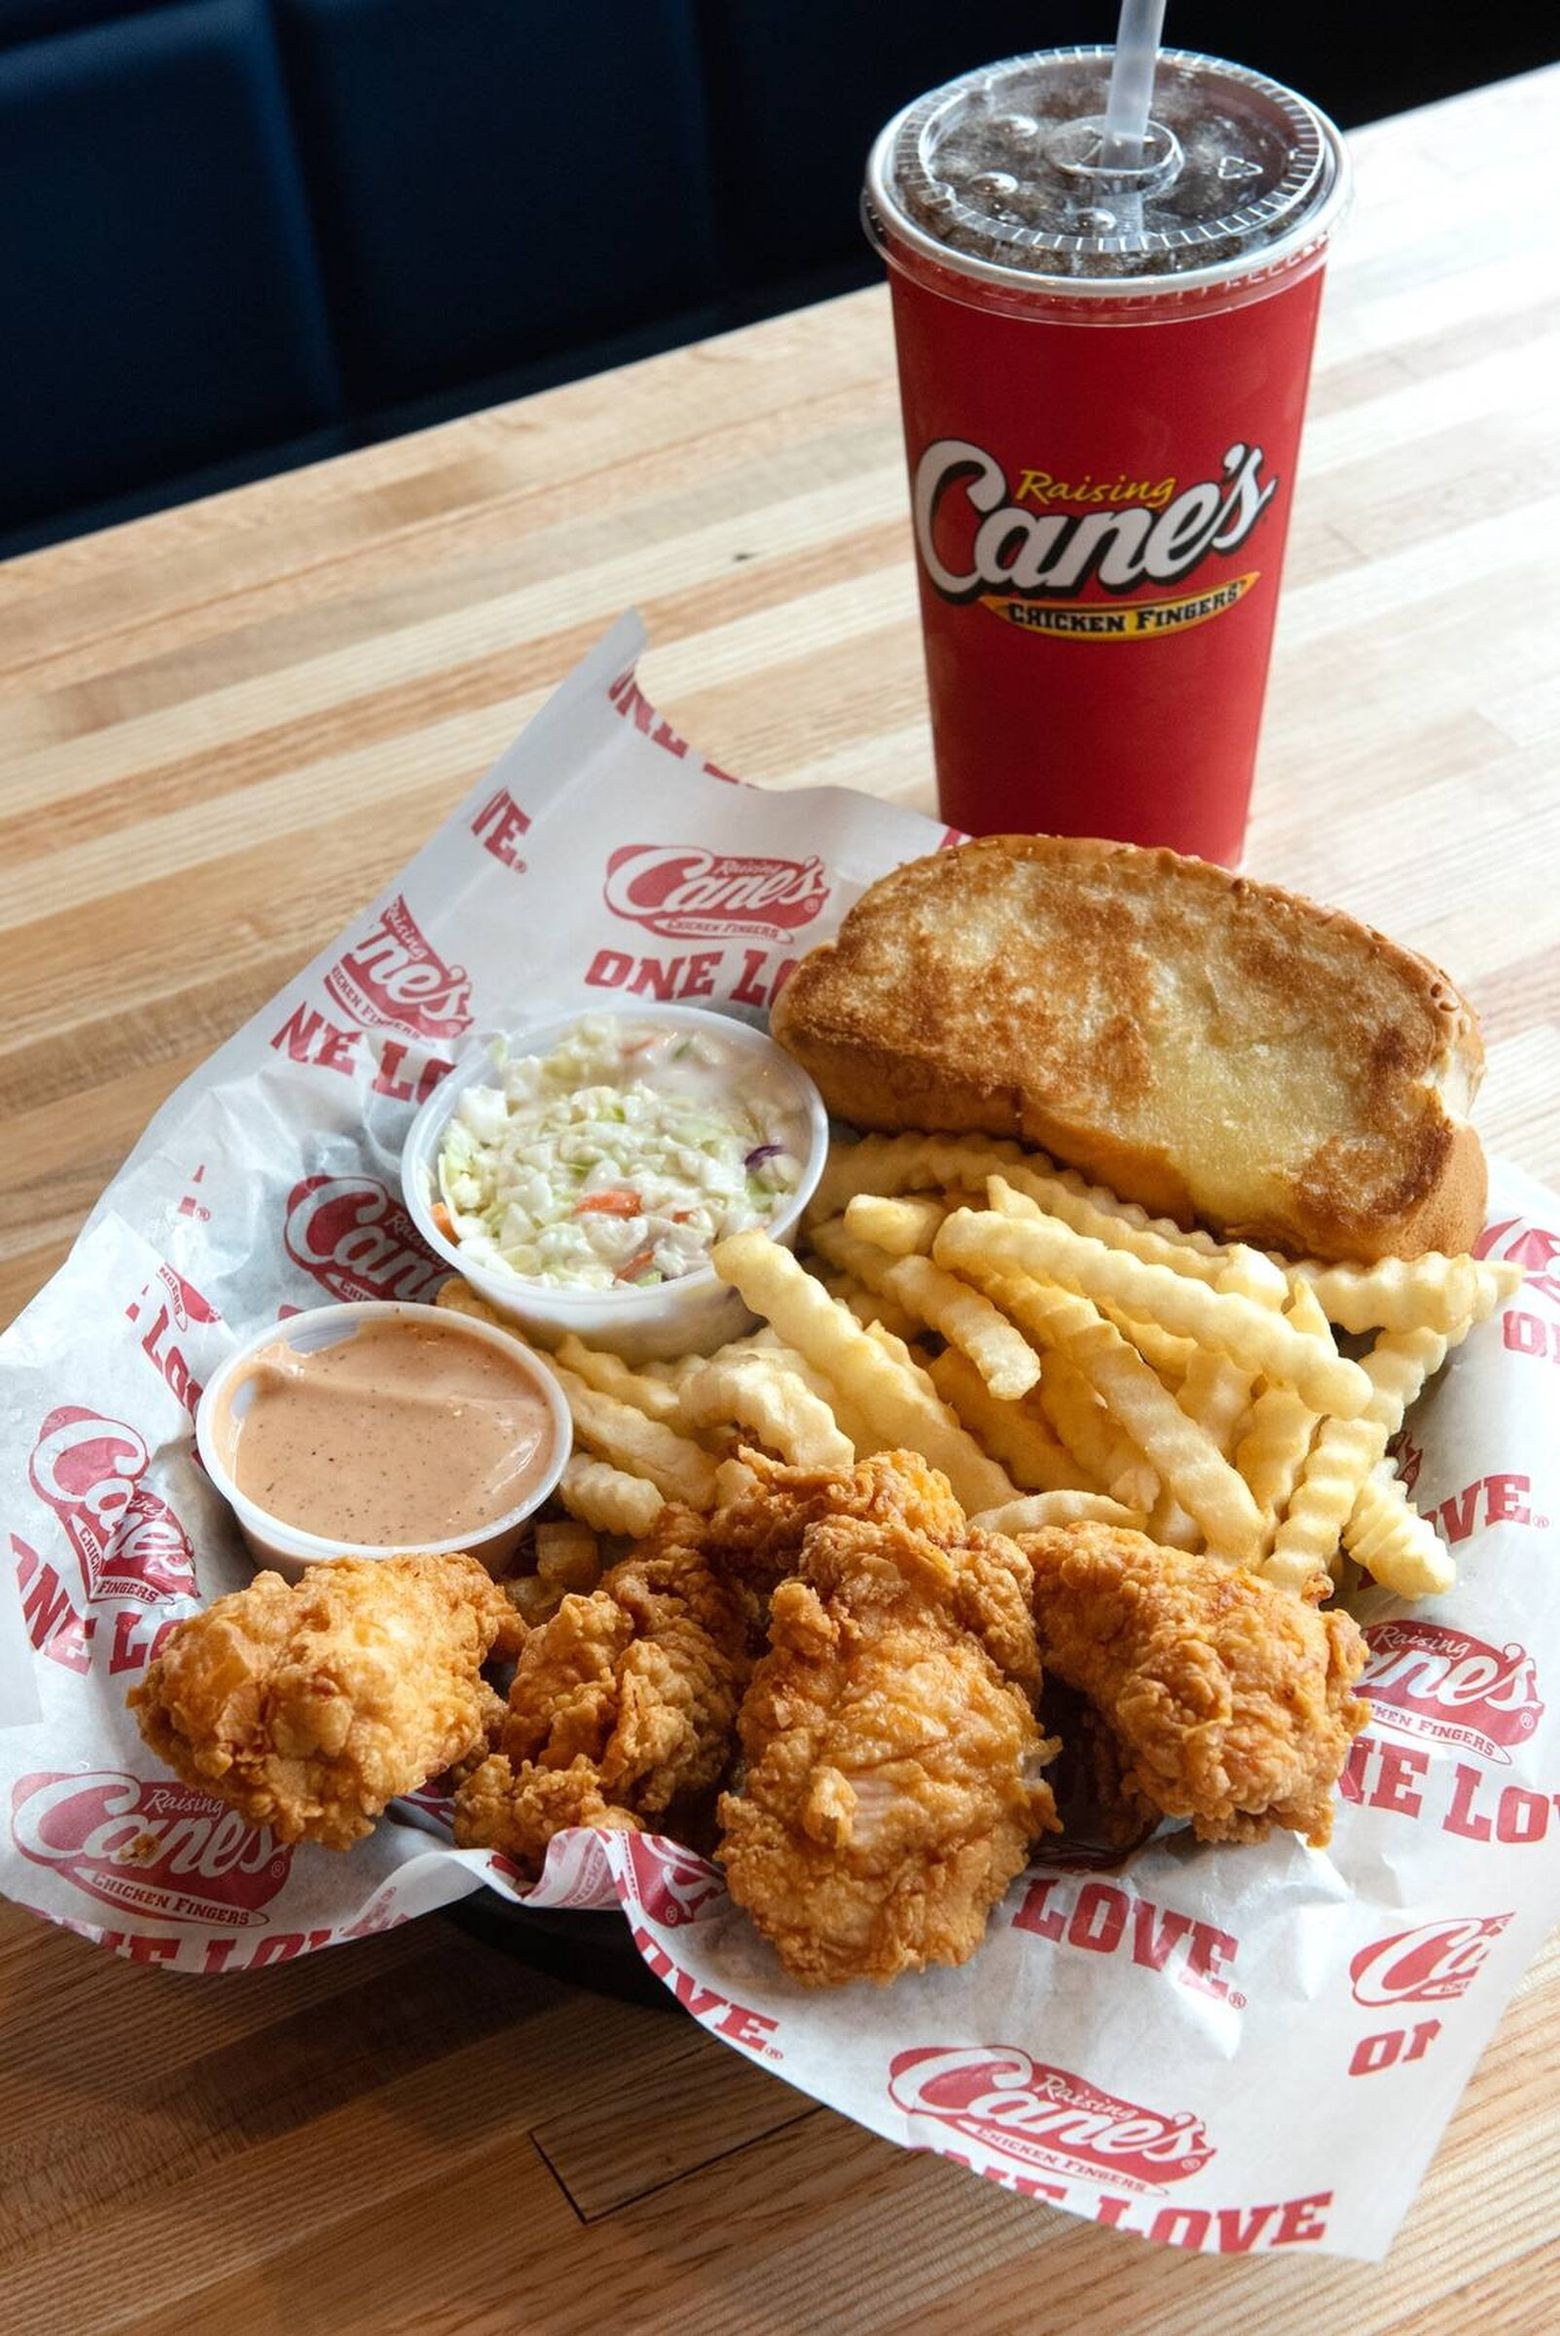 Popular fried chicken joint to open 1st Washington restaurant in